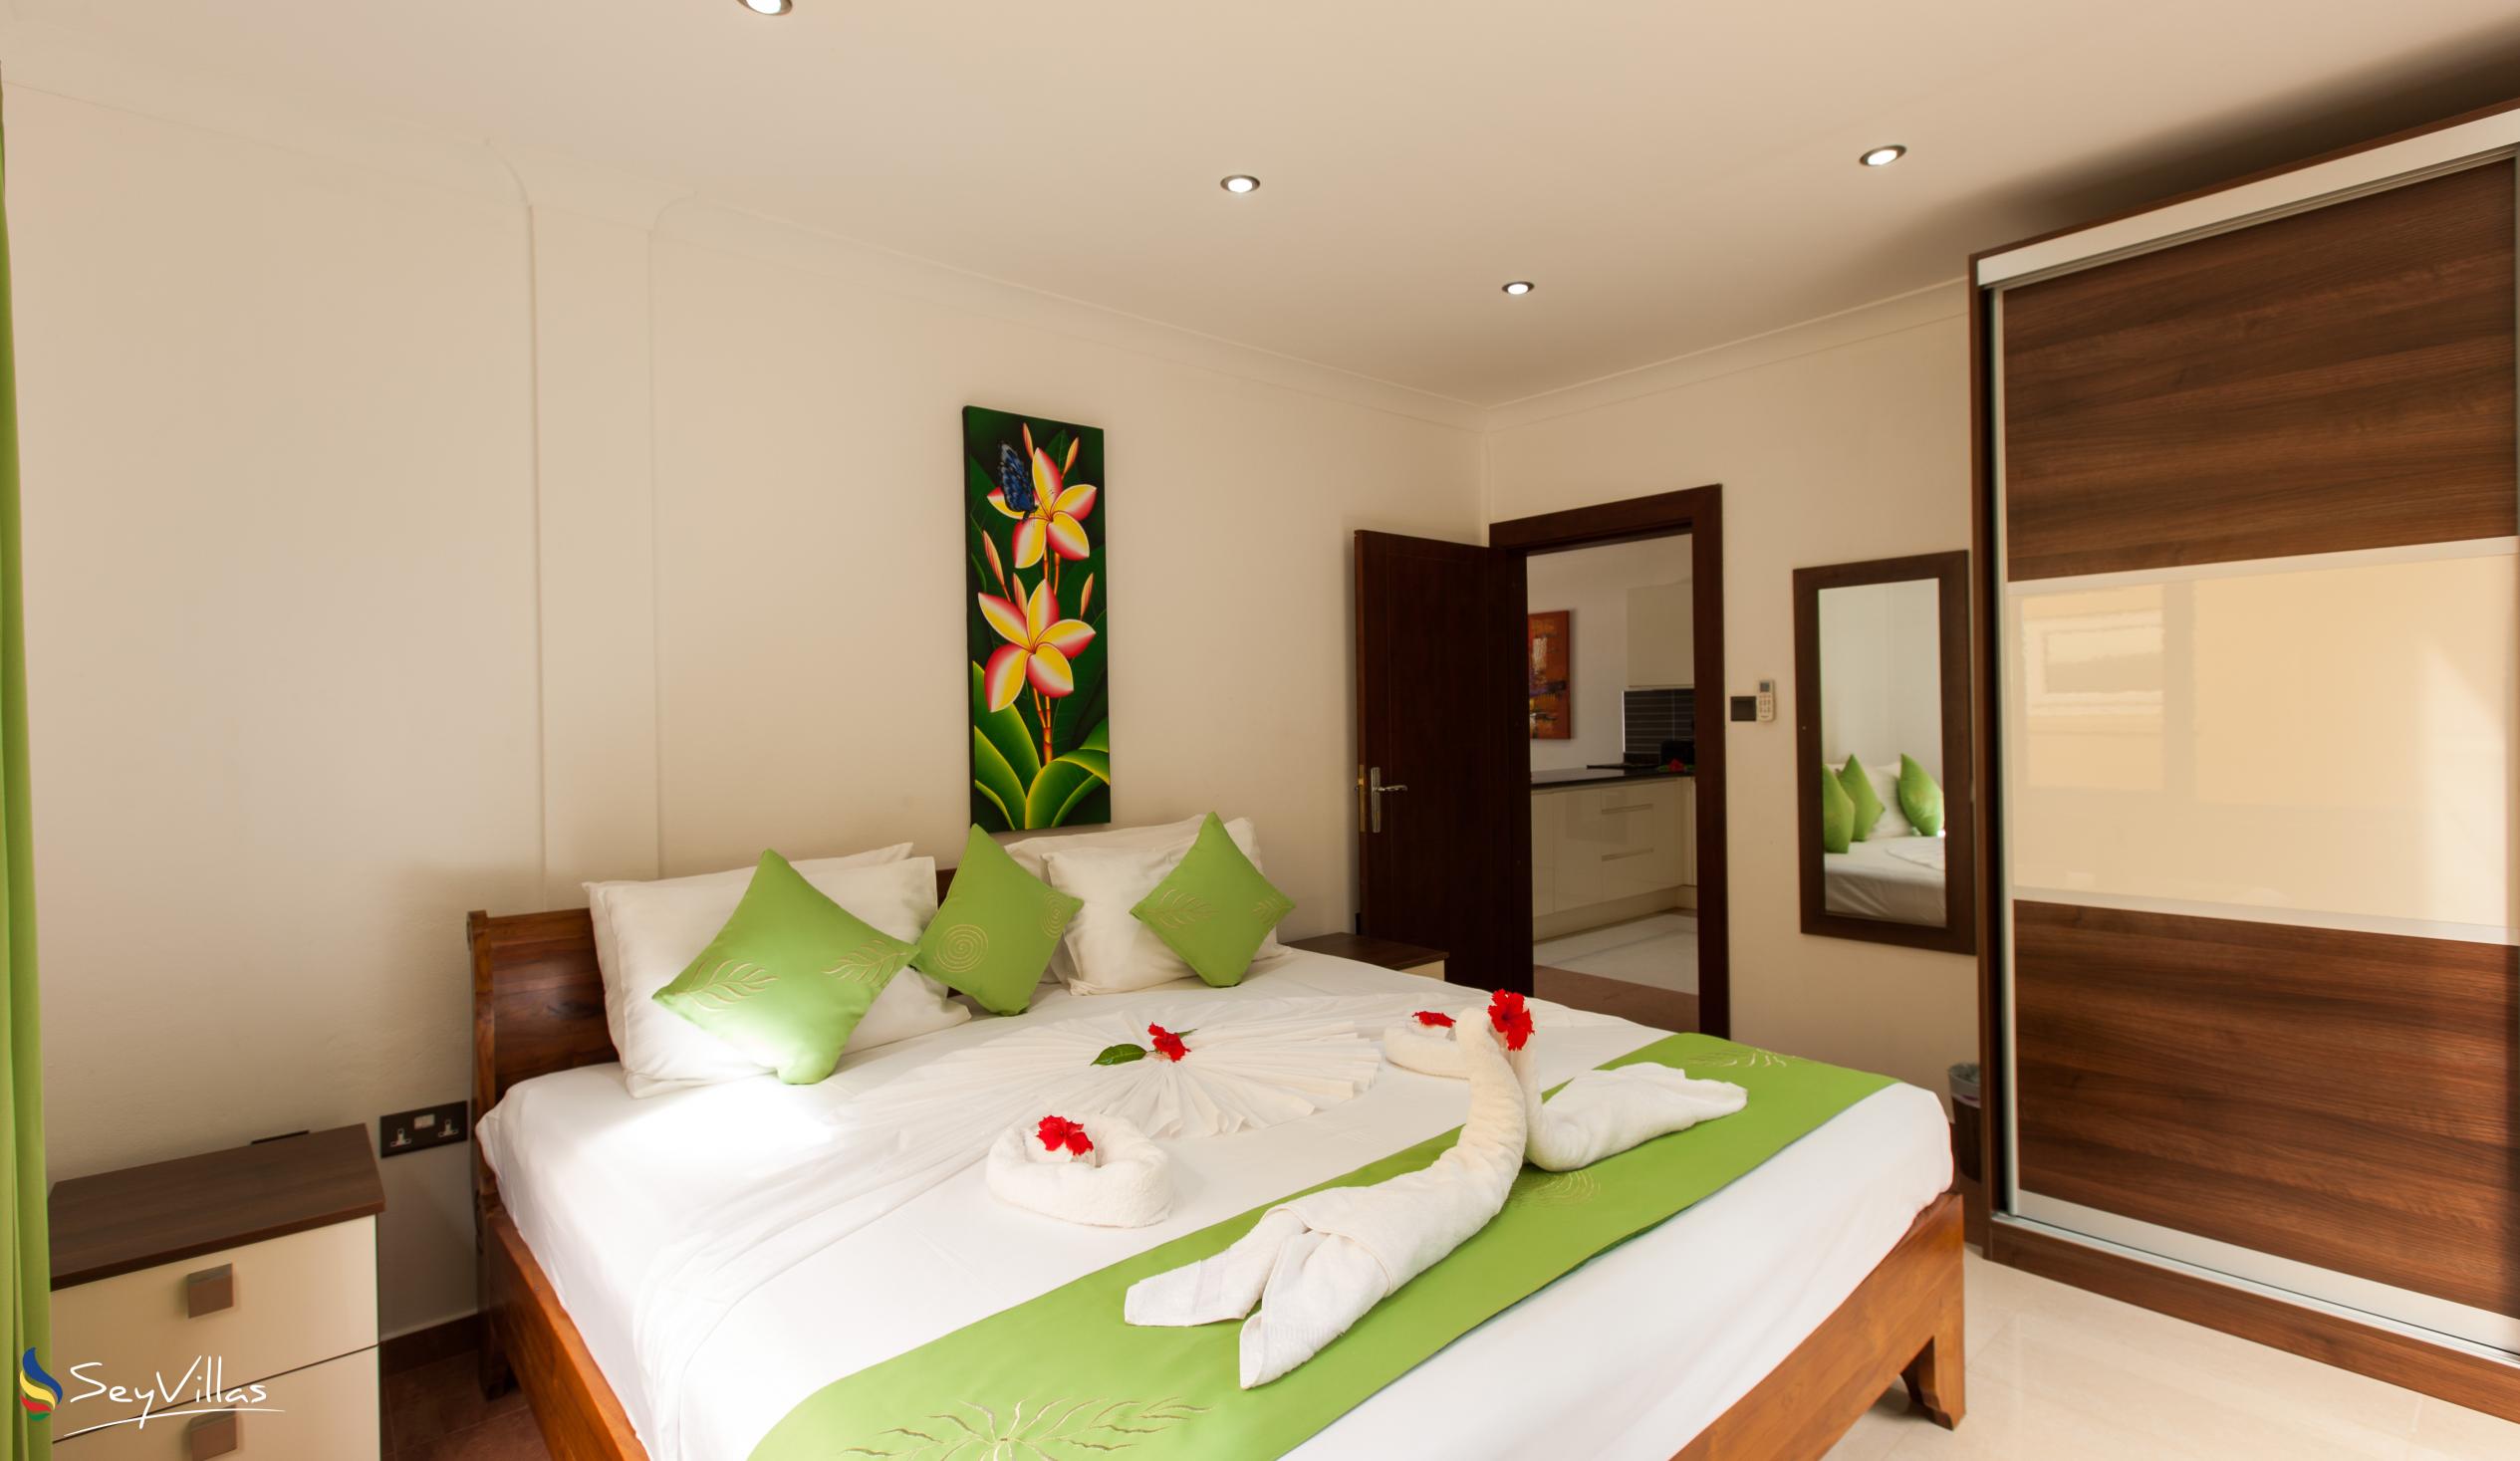 Foto 53: YASAD Luxury Beach Residence - Appartement 2 chambres - Praslin (Seychelles)